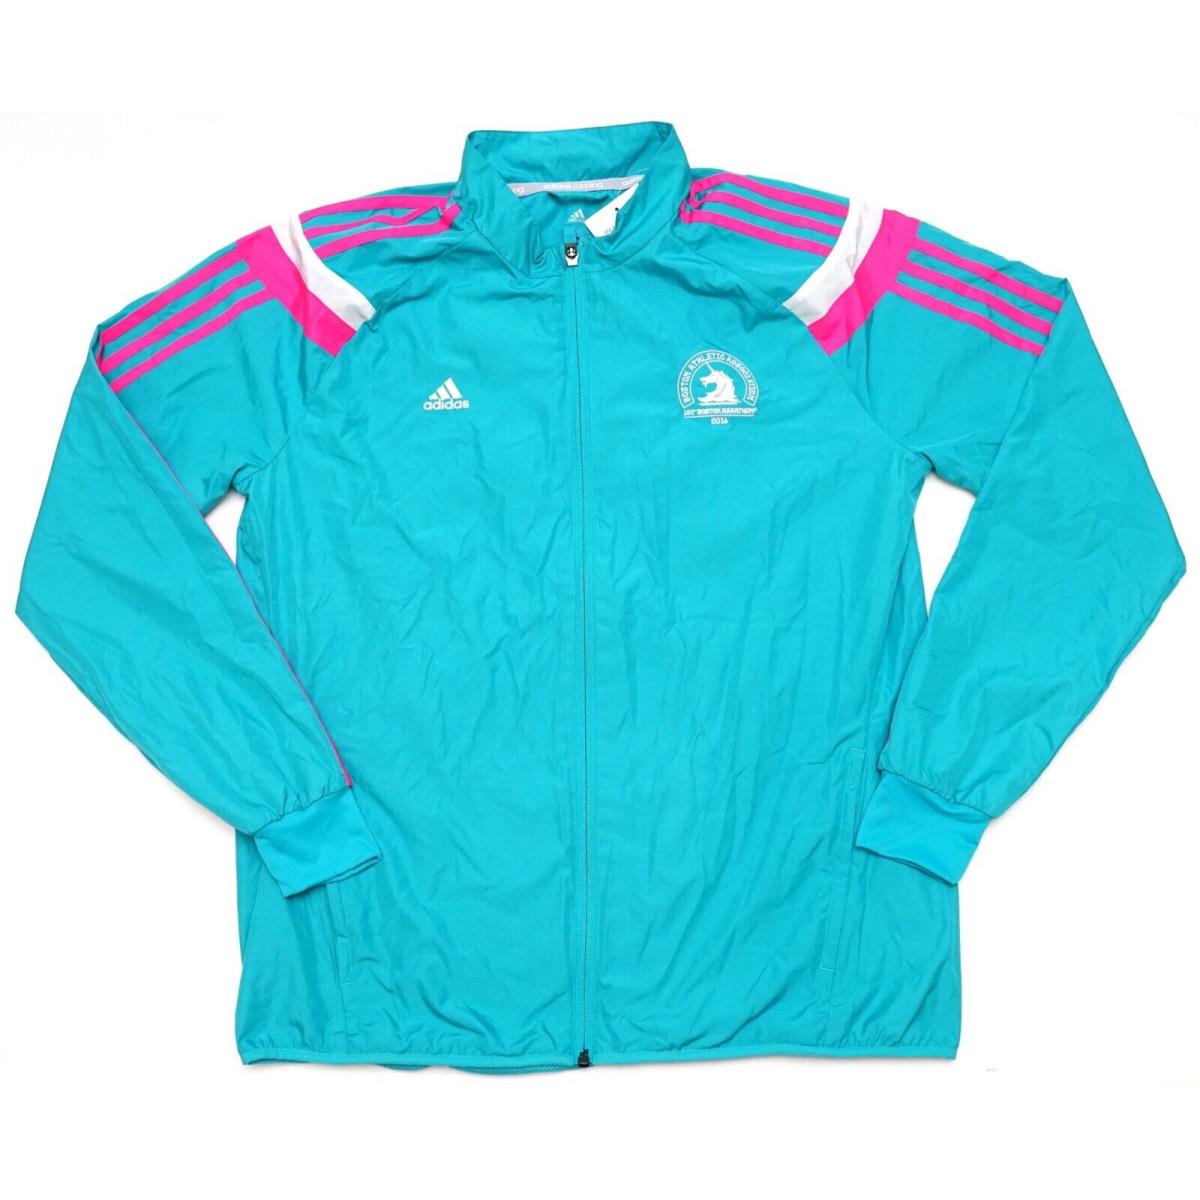 Adidas 2016 Boston Marathon Teal Anthem Women`s Windbreaker Jacket L